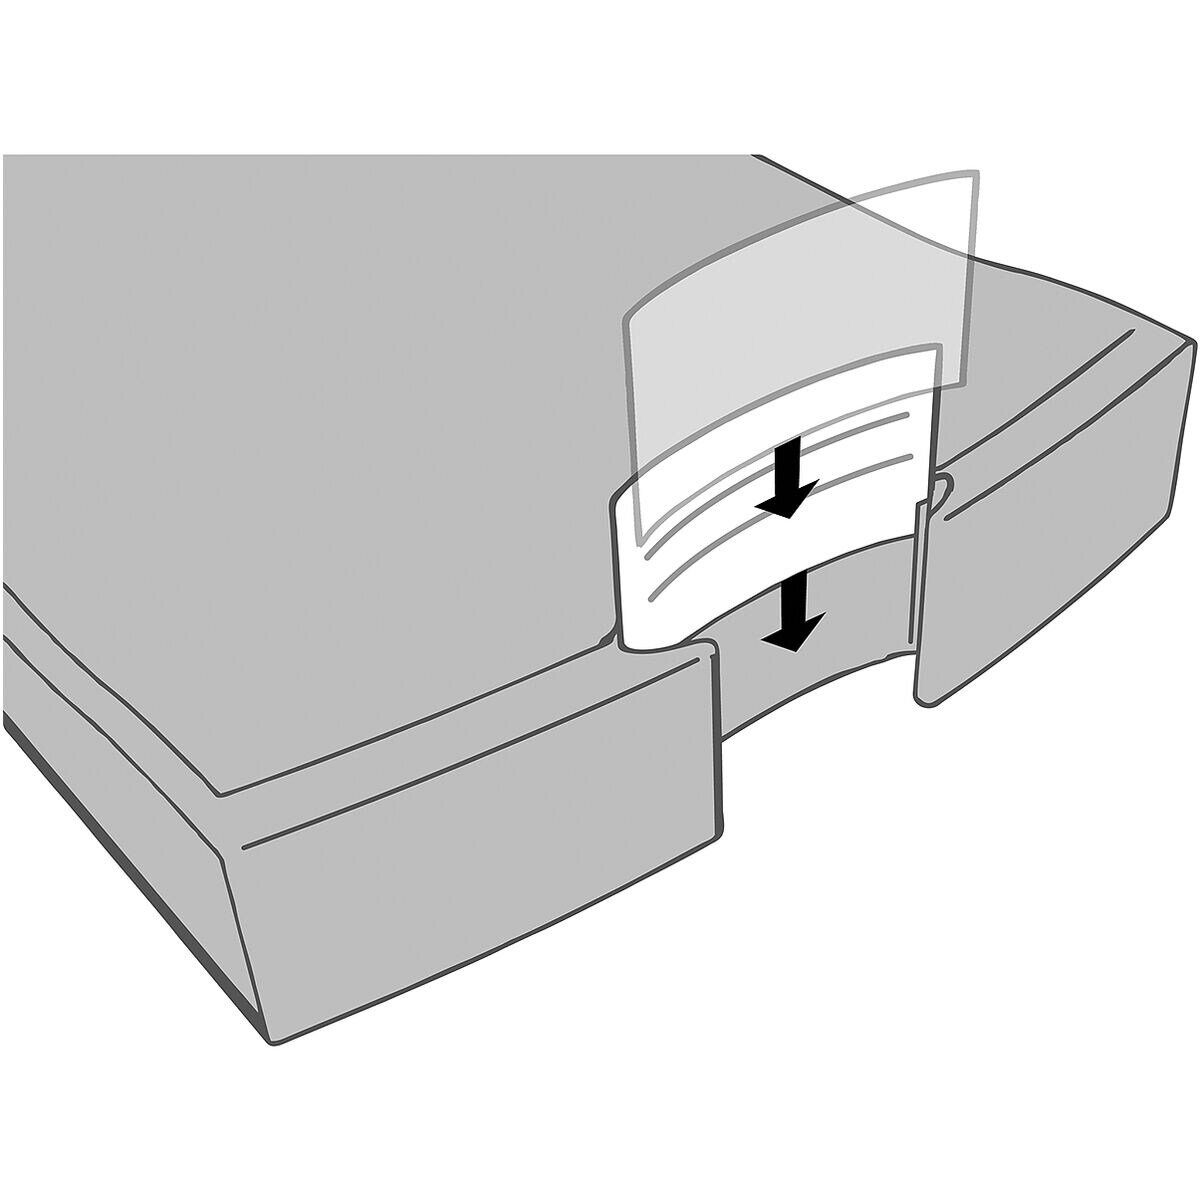 HAN Schubladenbox Impuls, 4 schwarz geschlossen, stapelbar mit Schubladen